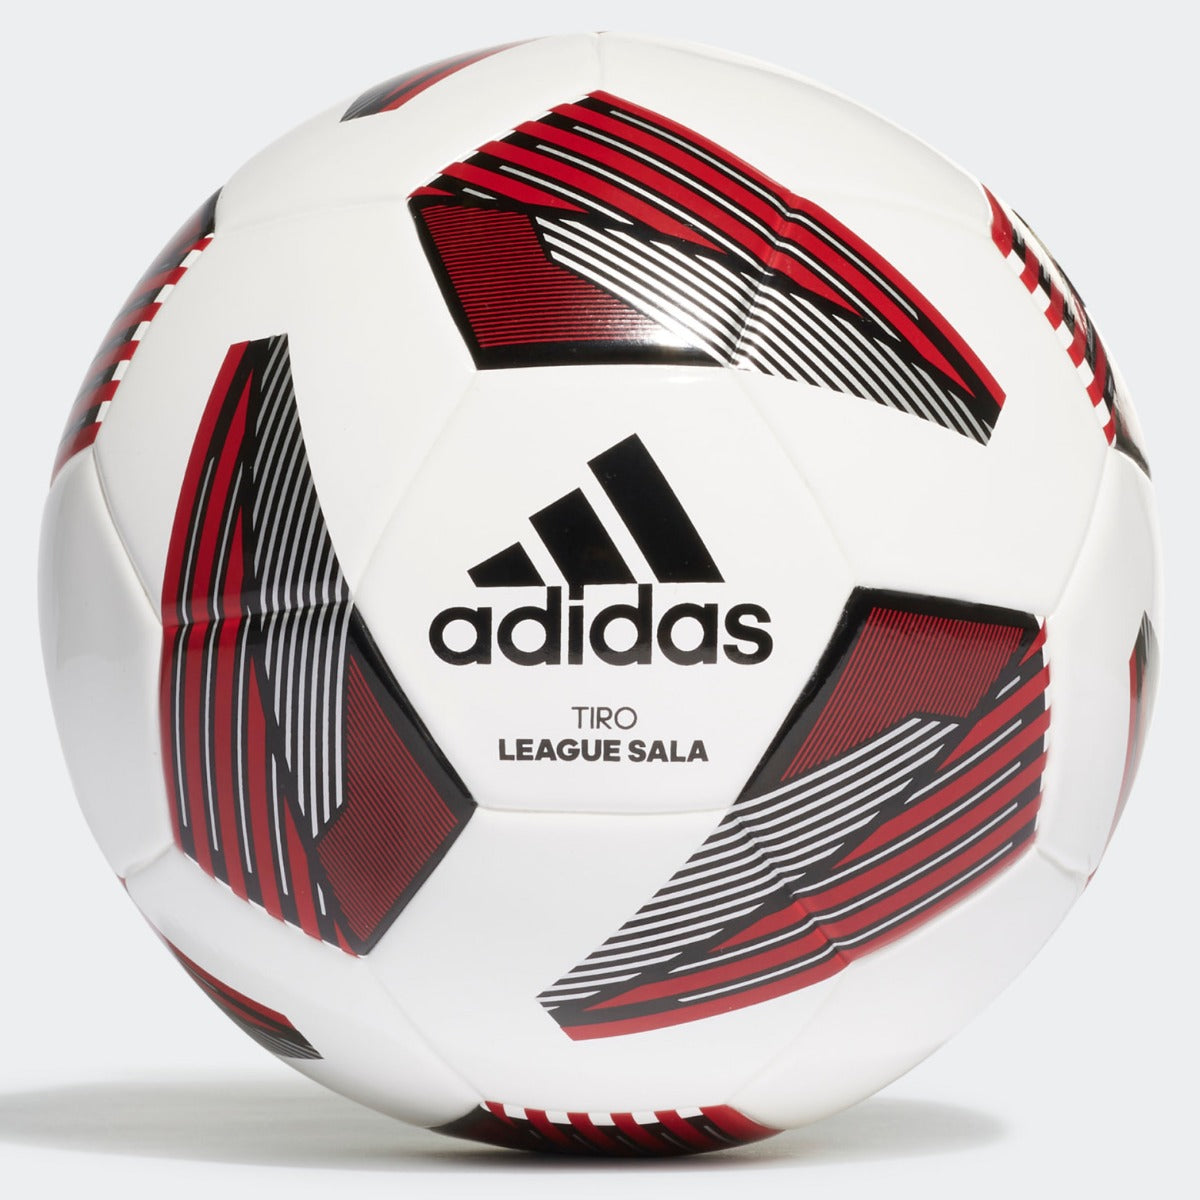 Adidas Tiro League Sala Ball - White-Power Red (Front)